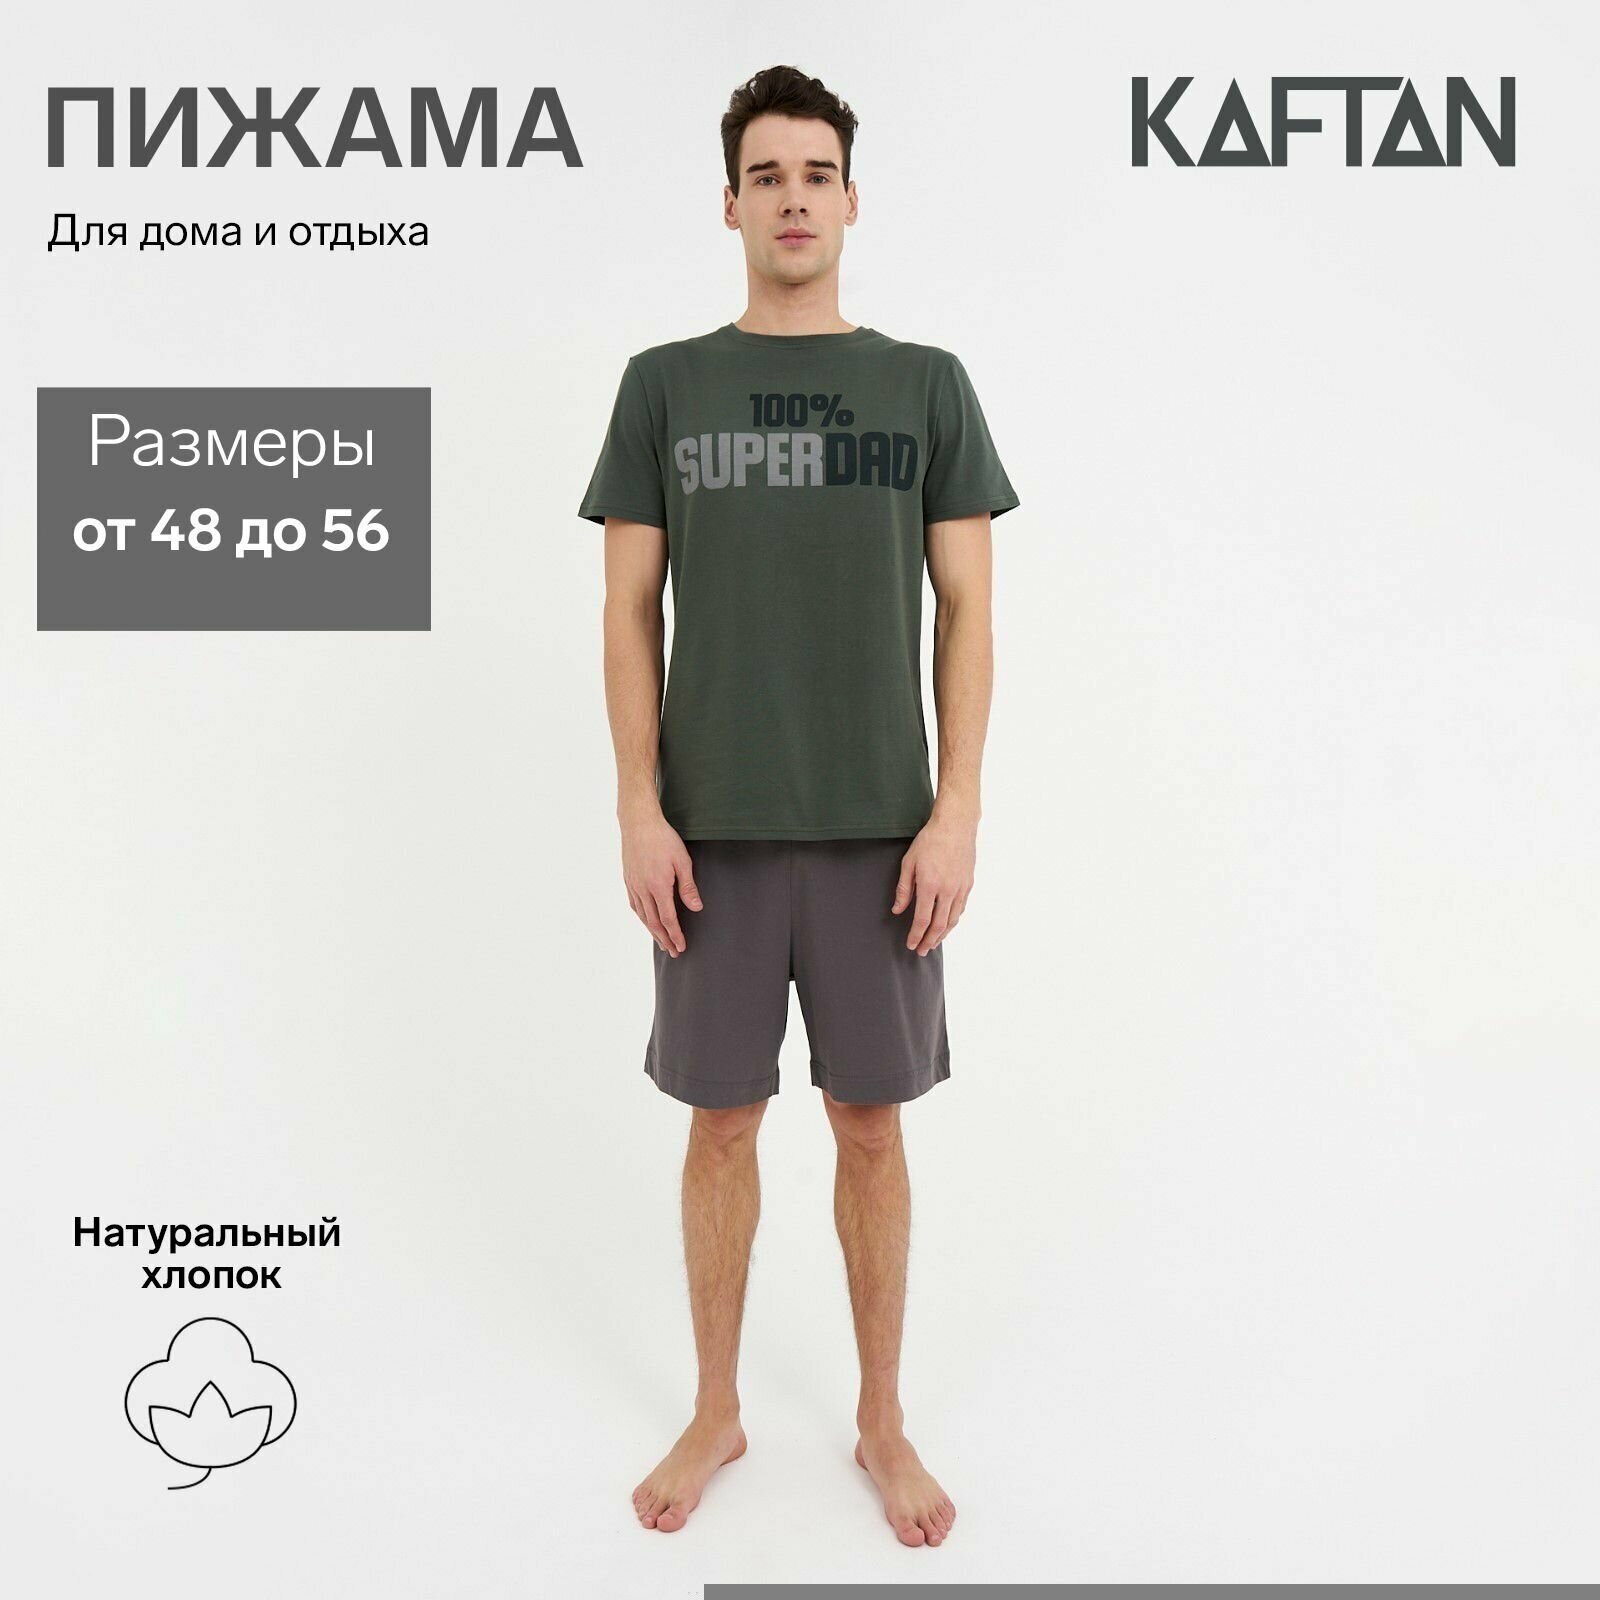 Пижама Kaftan, футболка, шорты, размер 54, зеленый - фотография № 1